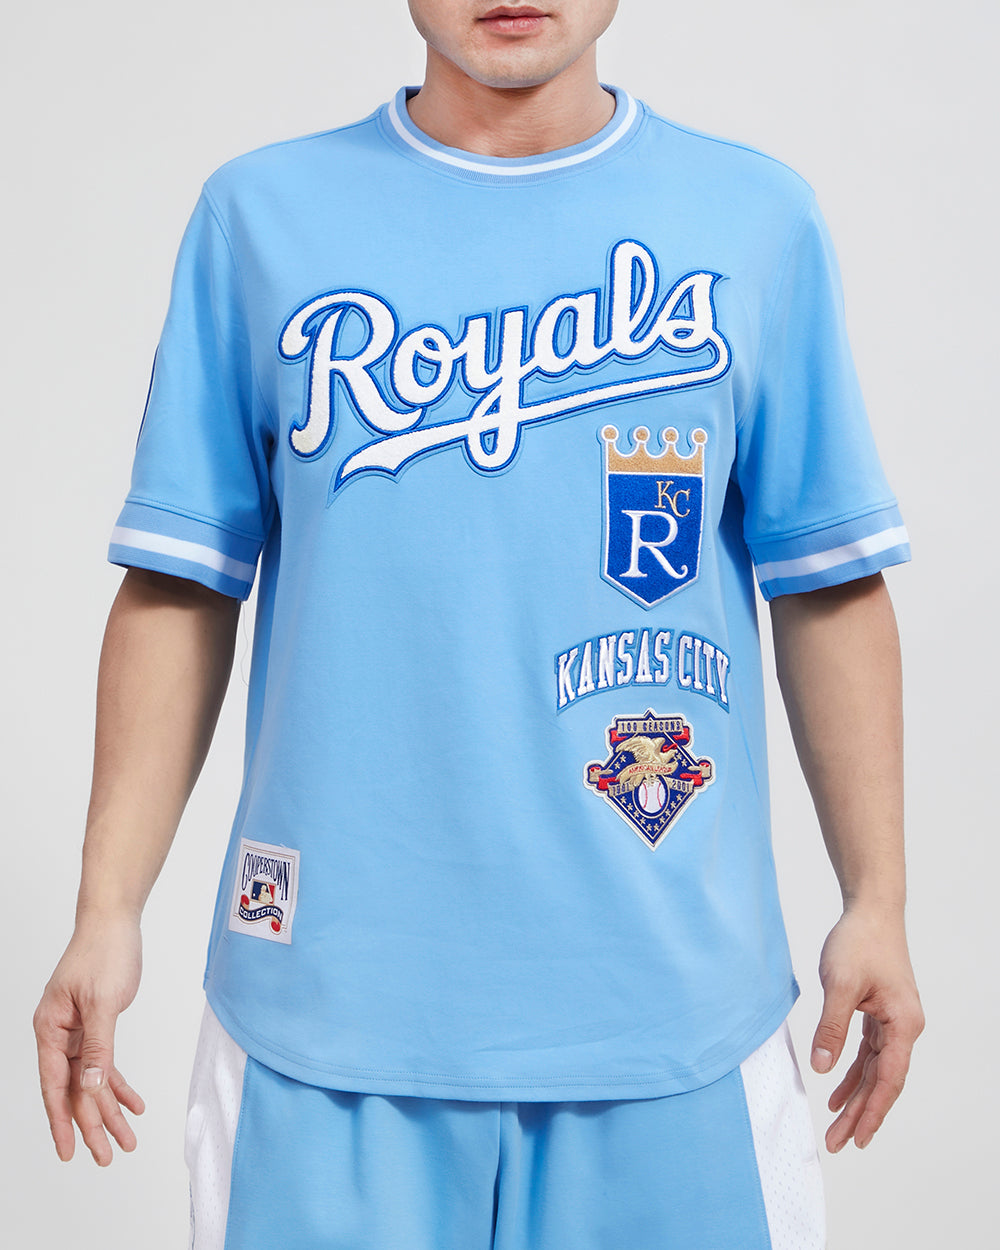 MLB KANSAS CITY ROYALS RETRO CLASSIC MEN'S TOP (UNIVERSITY BLUE)